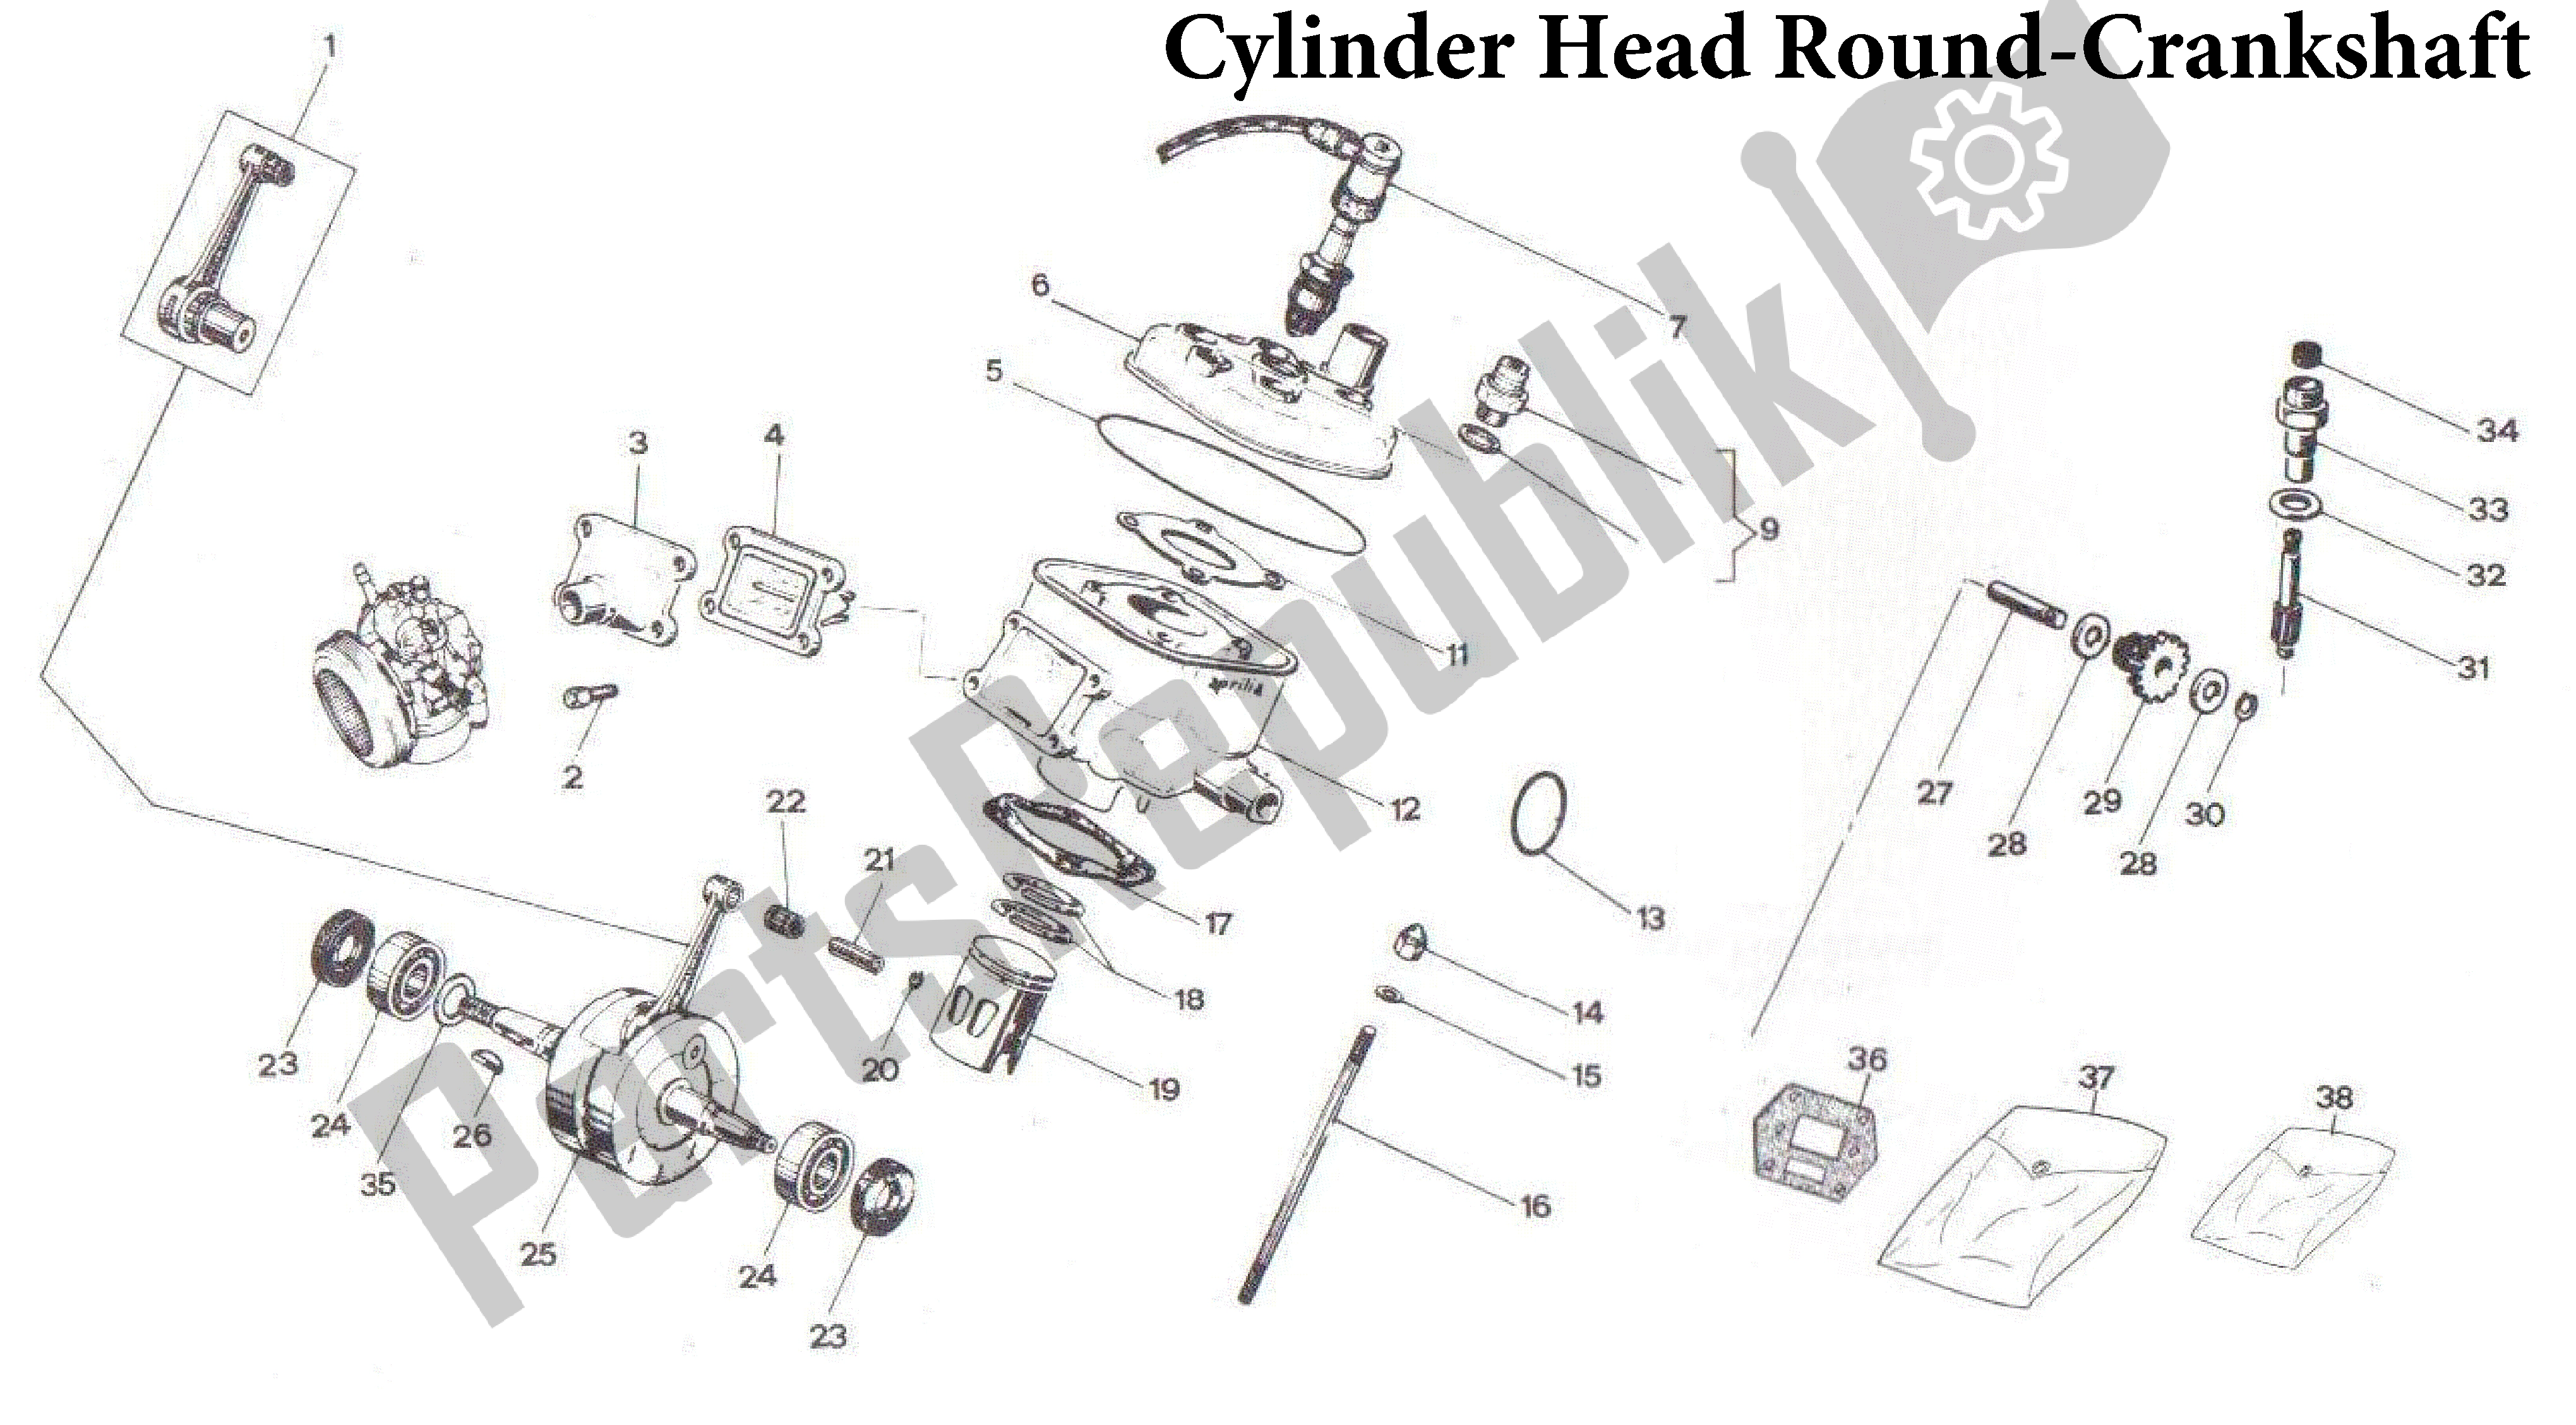 All parts for the Cylinder Head Round-crankshaft of the Aprilia AF1 50 1990